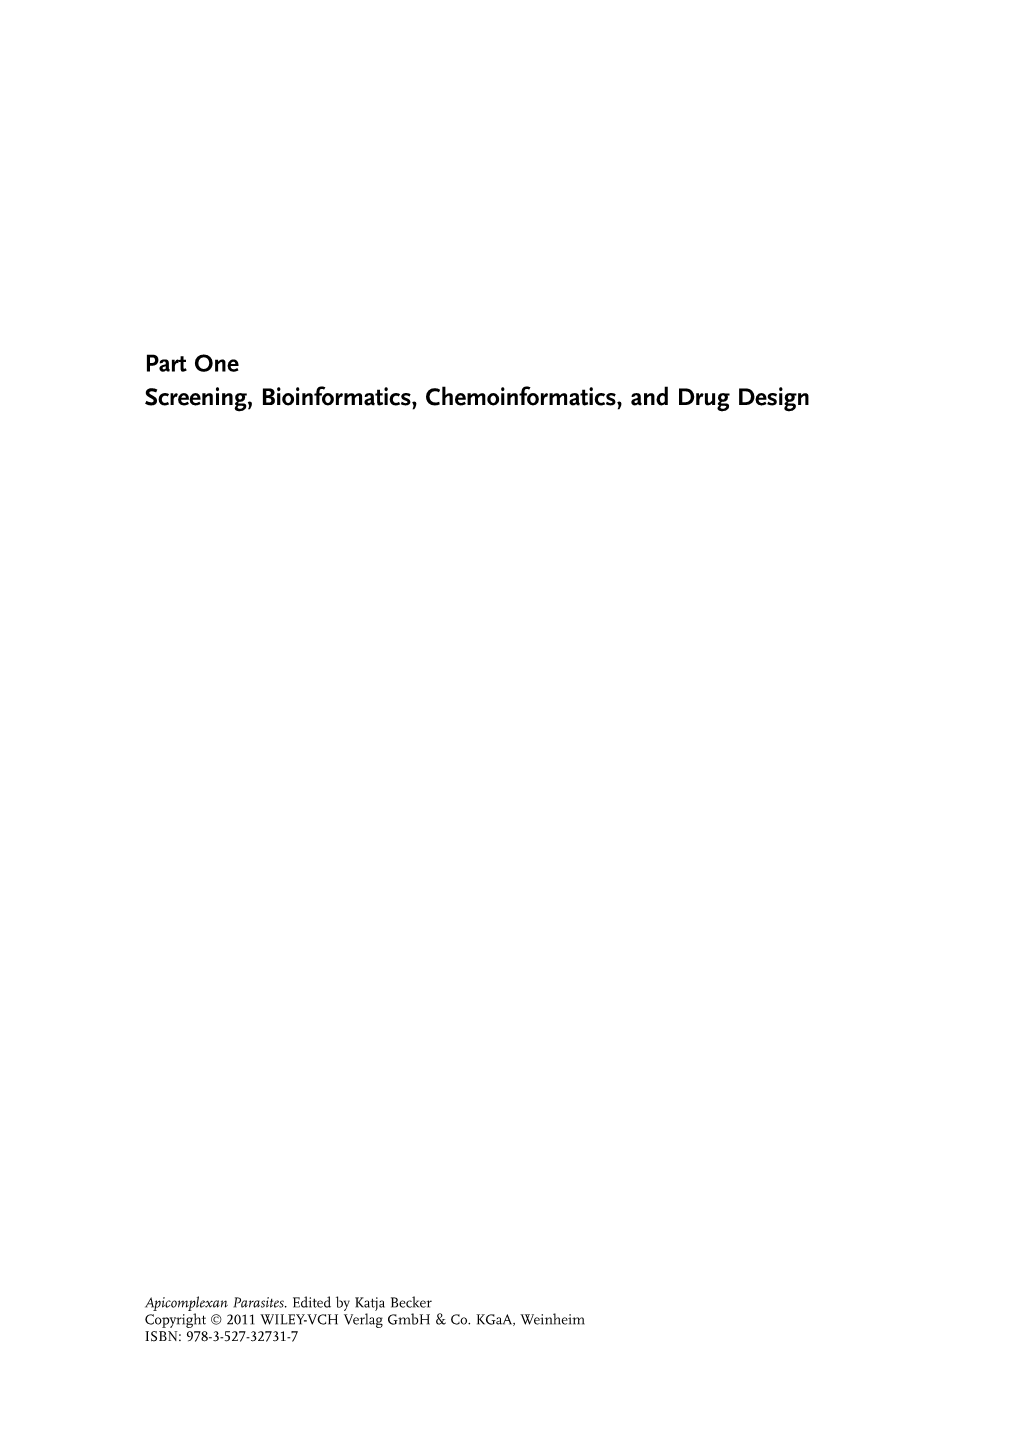 Part One Screening, Bioinformatics, Chemoinformatics, and Drug Design